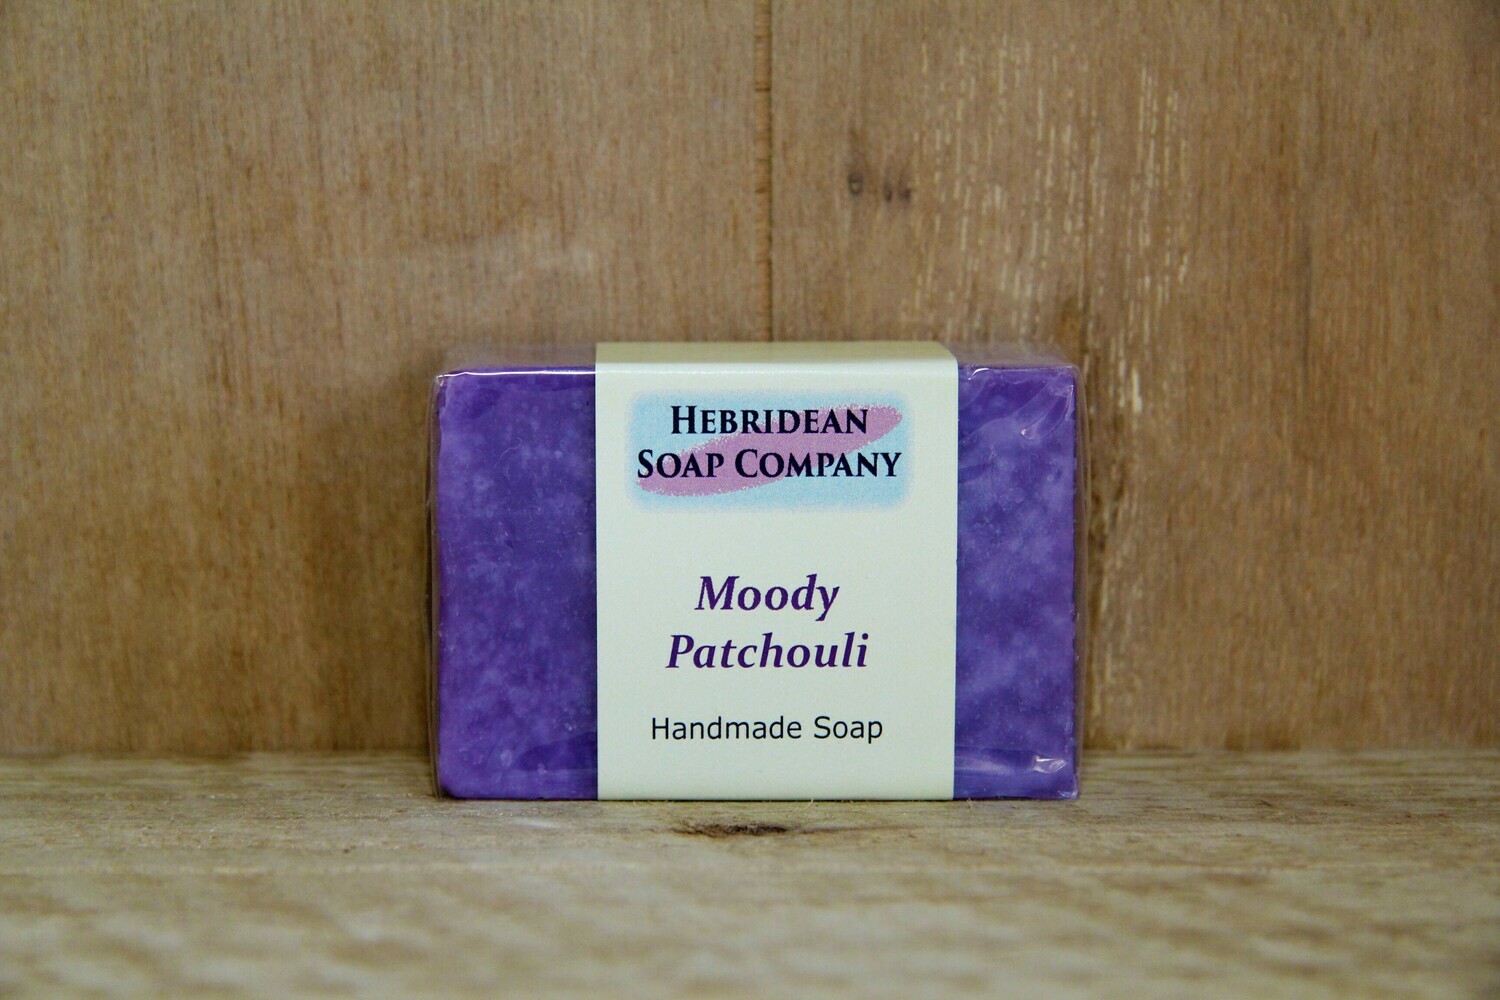 Moody patchouli soap bar